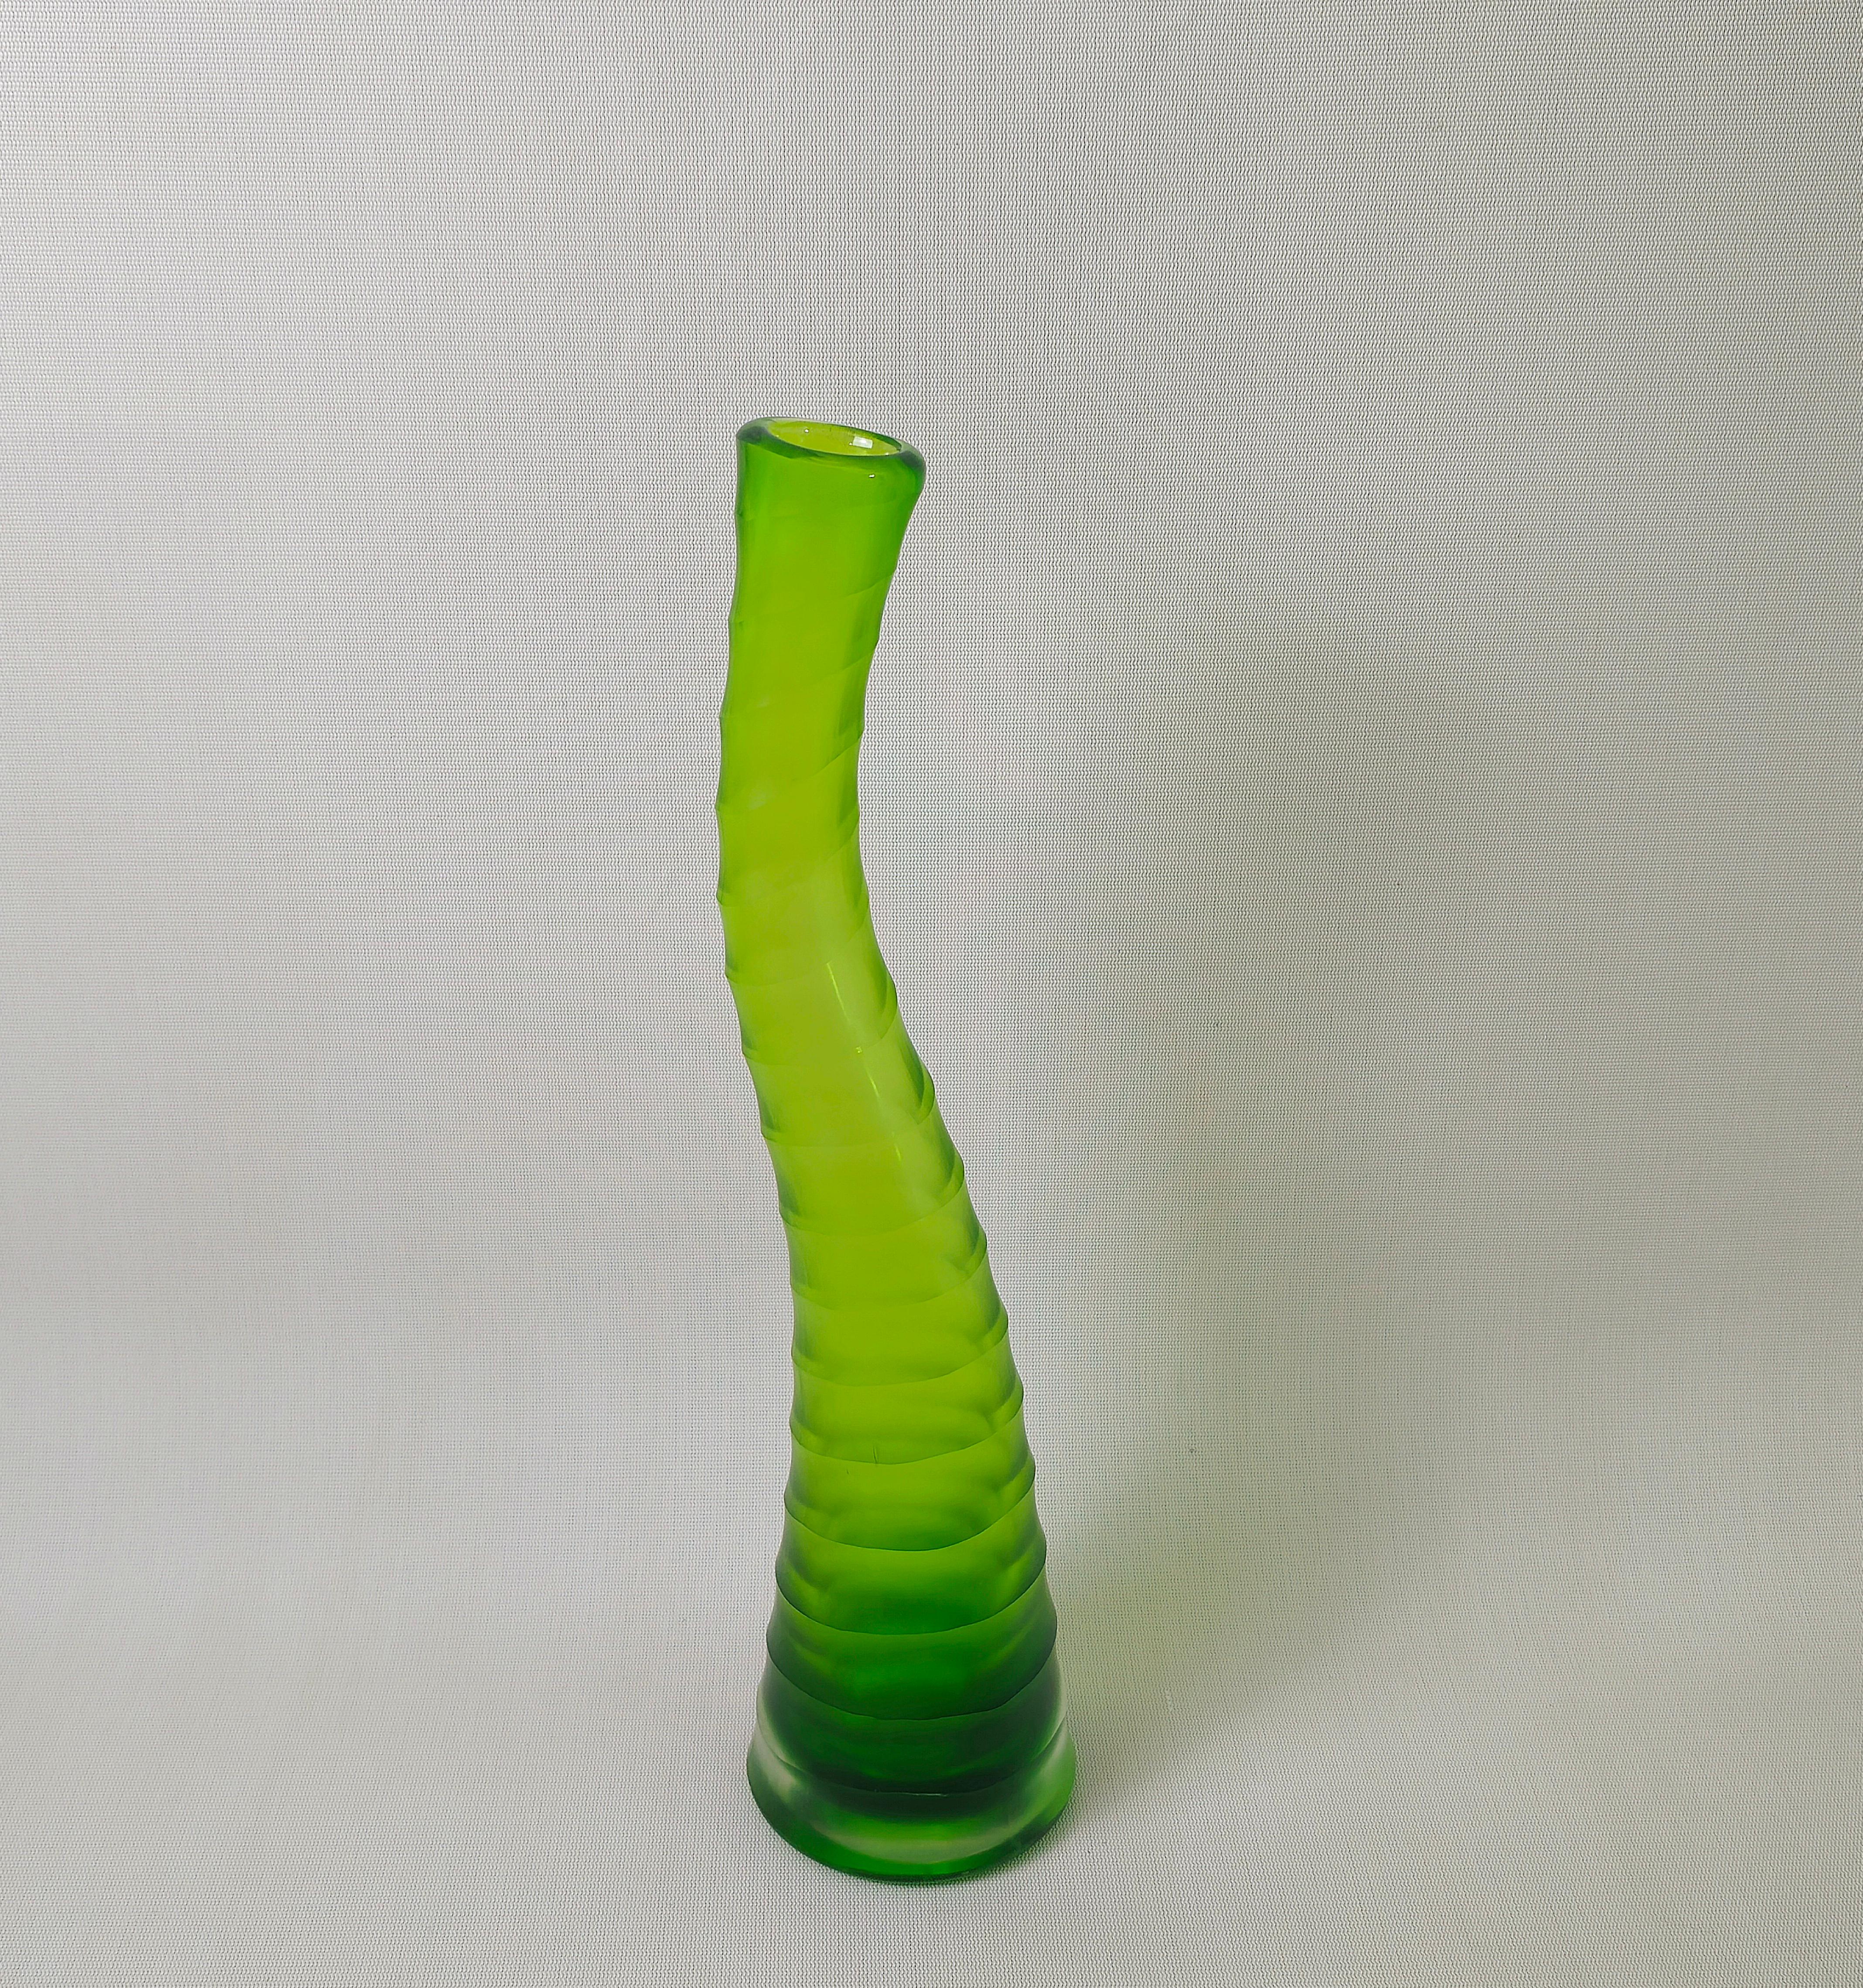 Vase Decorative Object Murano Glass Green Midcentury Modern Italian Design 1970s For Sale 4